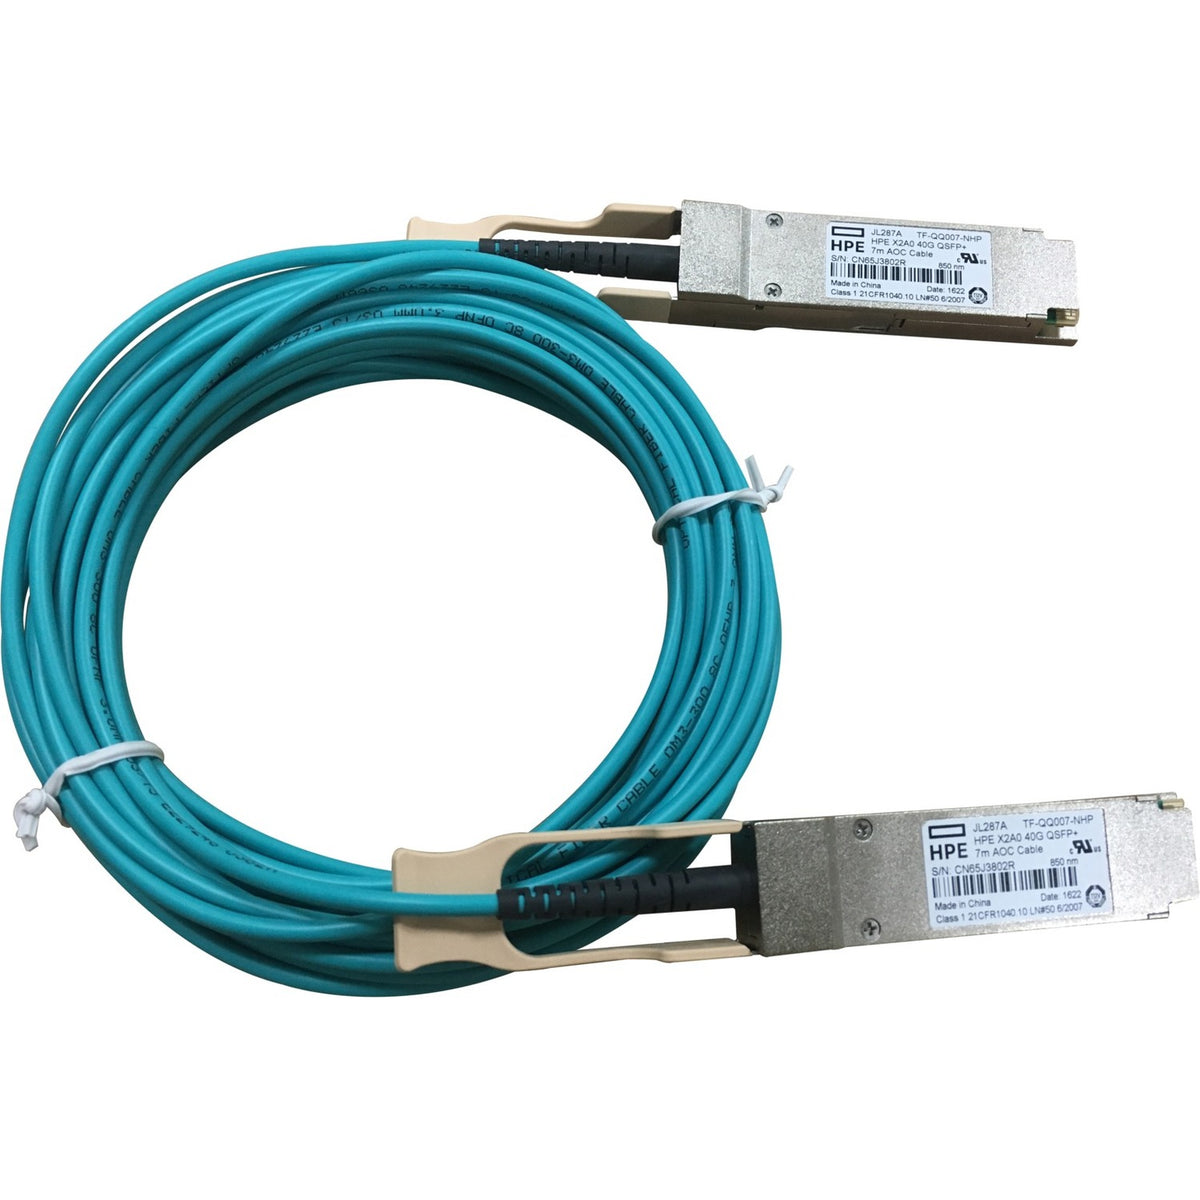 Accortec X2A0 40G QSFP+ to QSFP+ 7m Active Optical Cable - JL287A-ACC